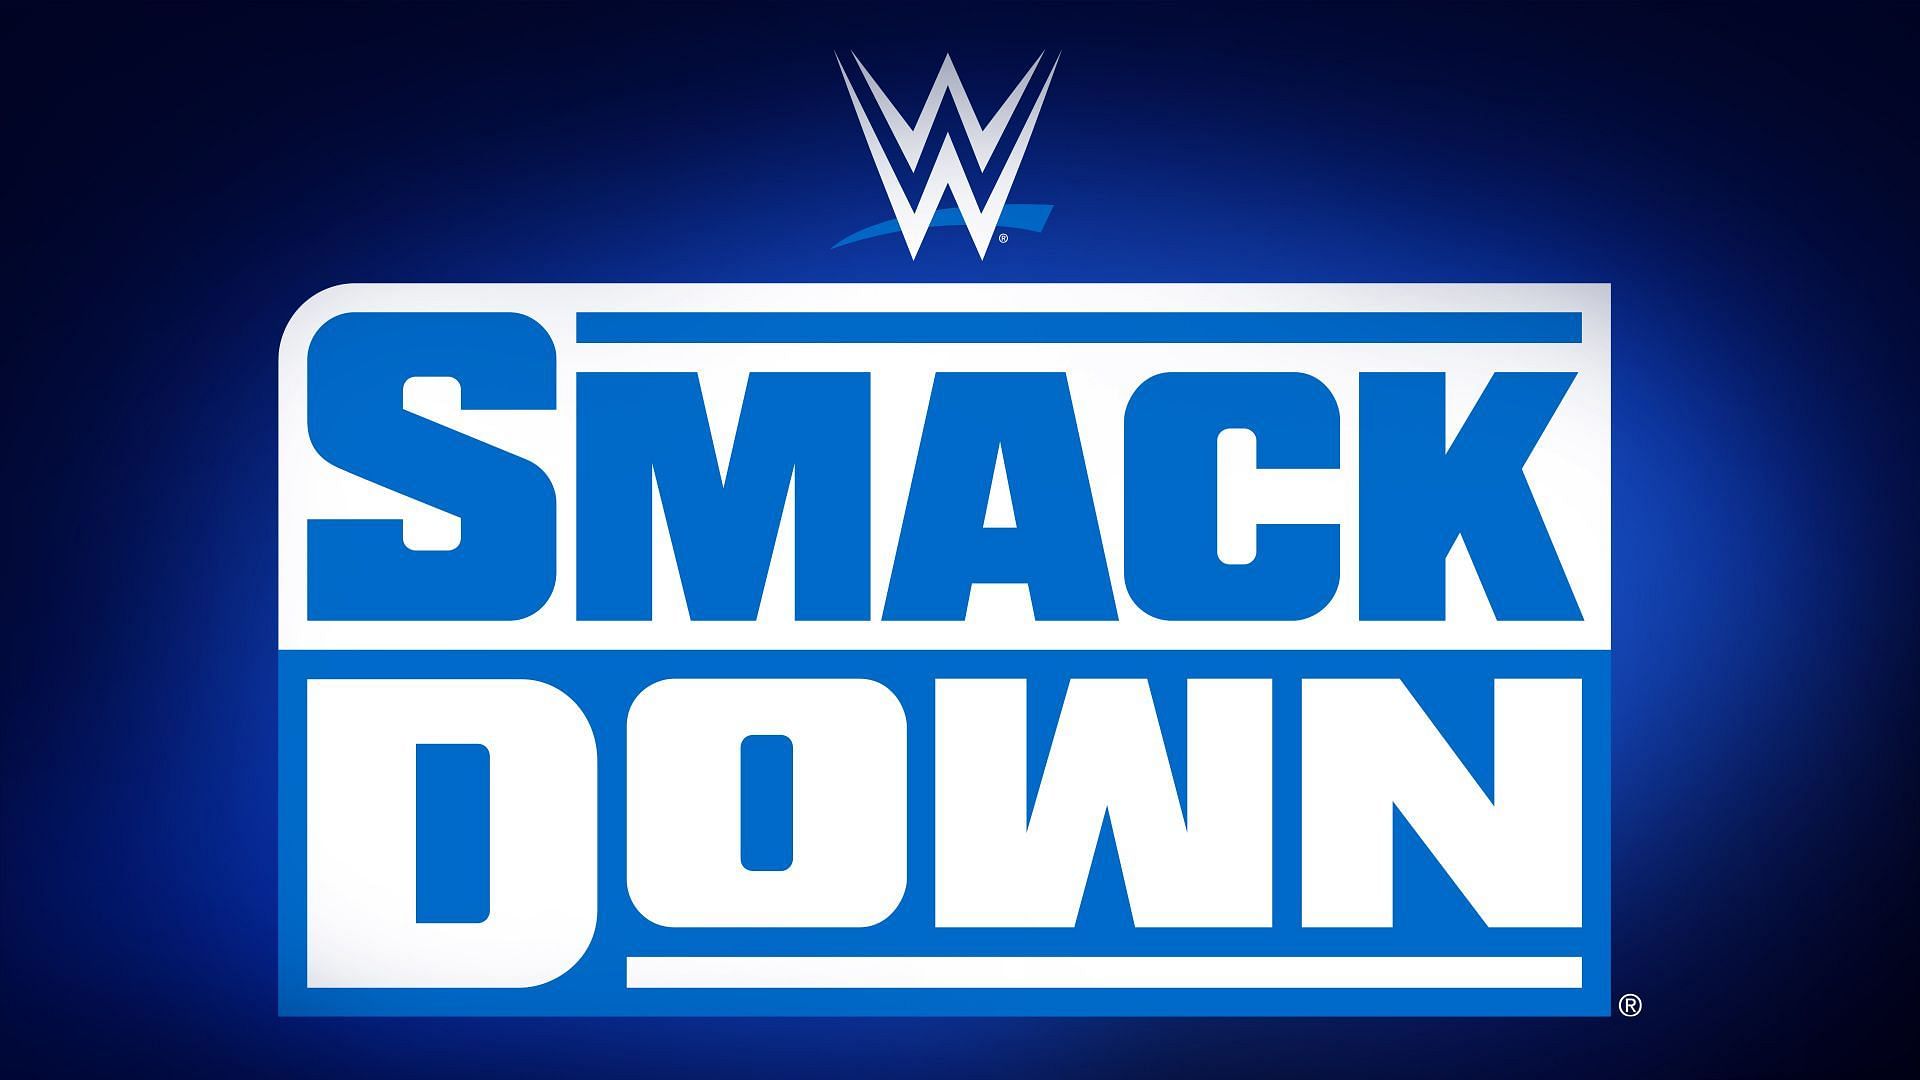 WWE SmackDown is the second longest-running weekly program.